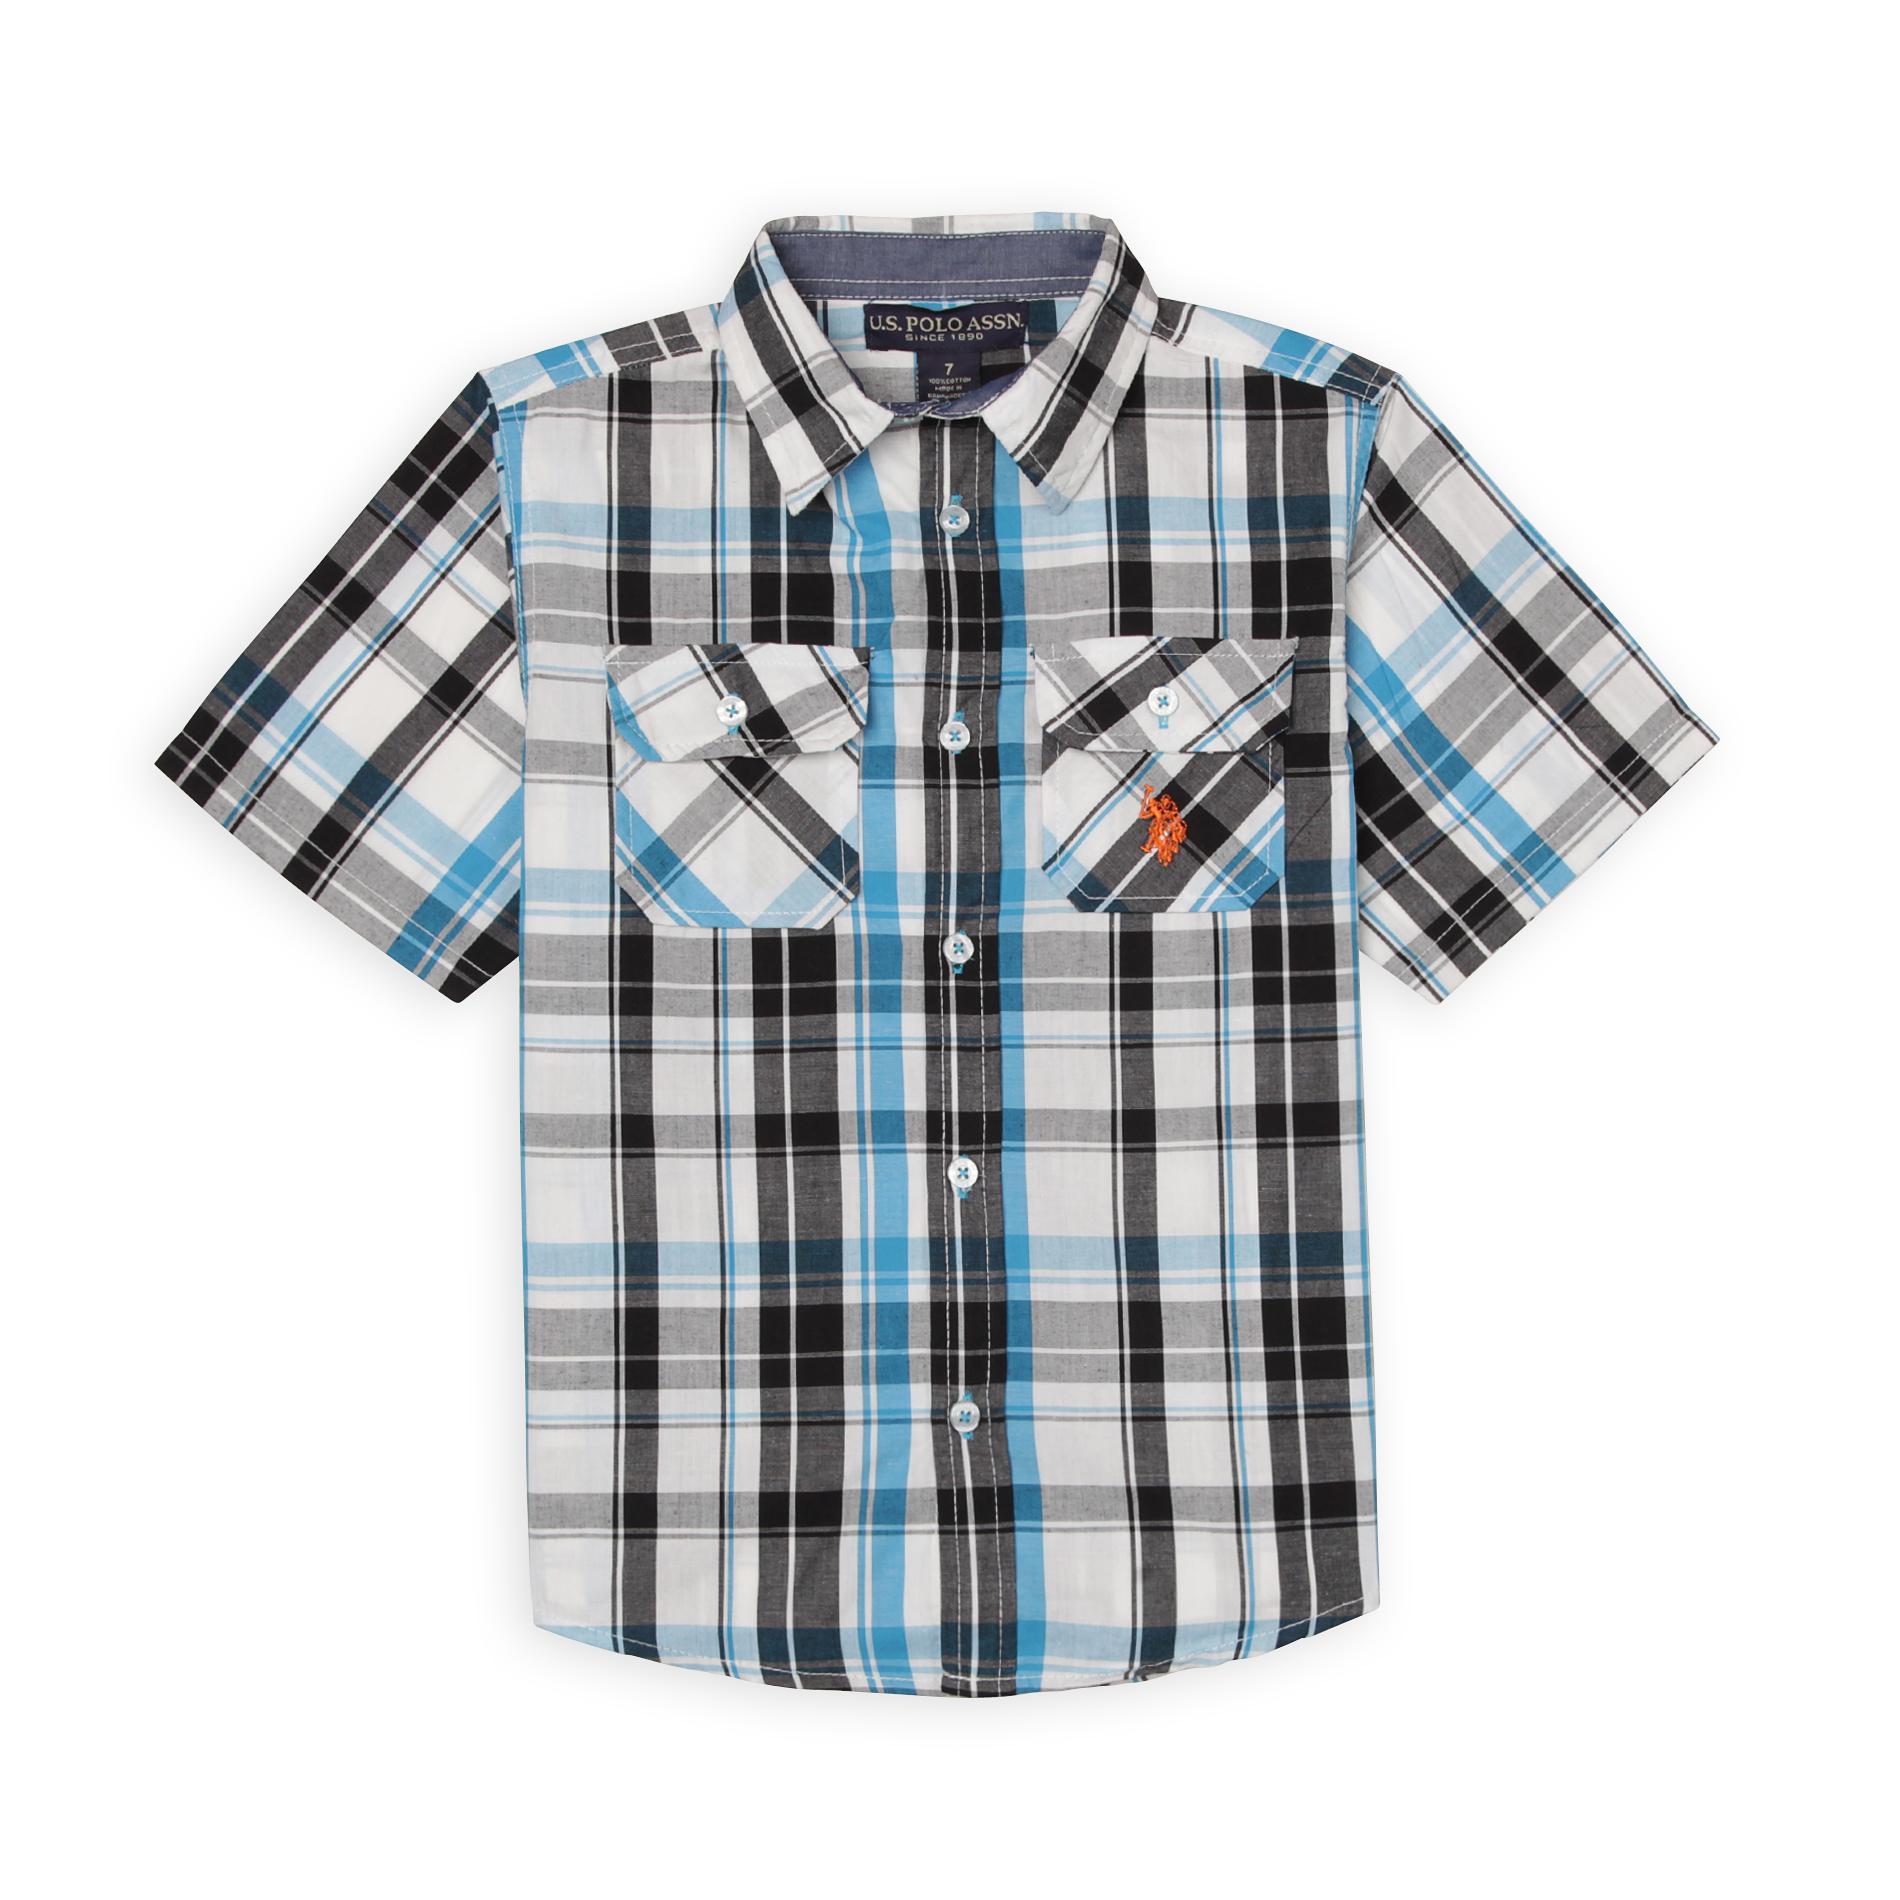 U.S. Polo Assn. Boy's Short-Sleeve Woven Shirt - Plaid